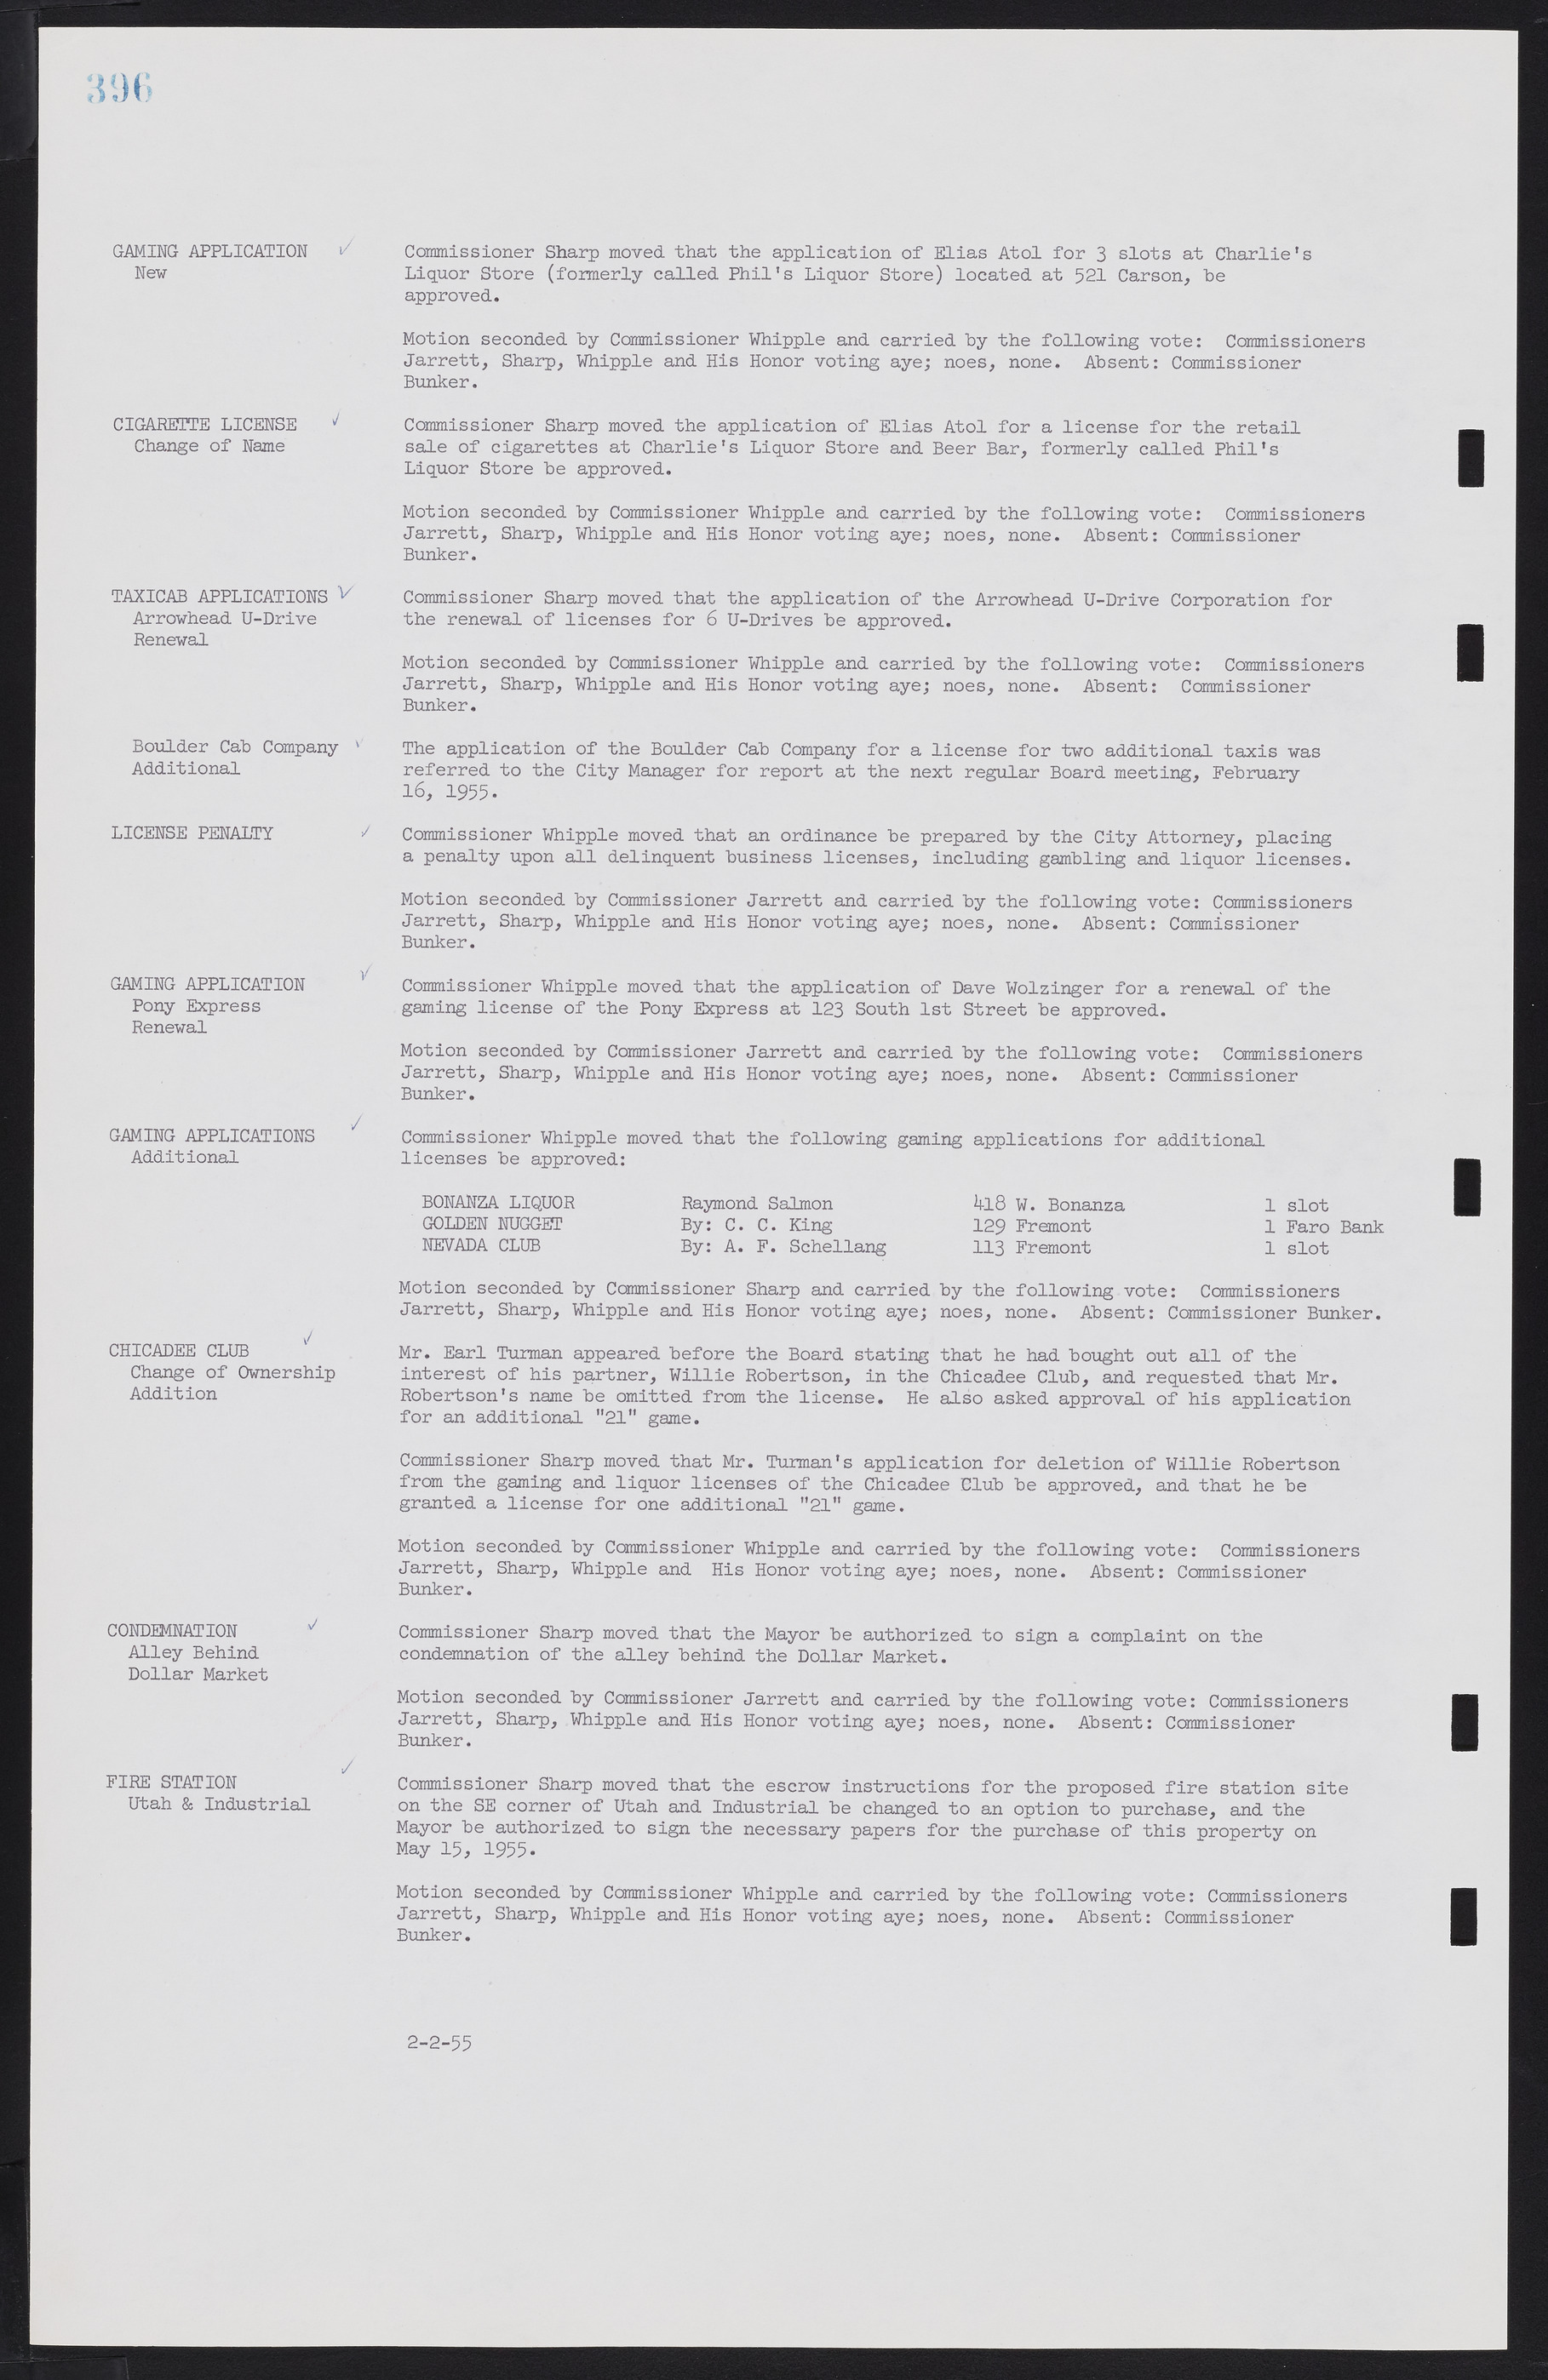 Las Vegas City Commission Minutes, February 17, 1954 to September 21, 1955, lvc000009-402